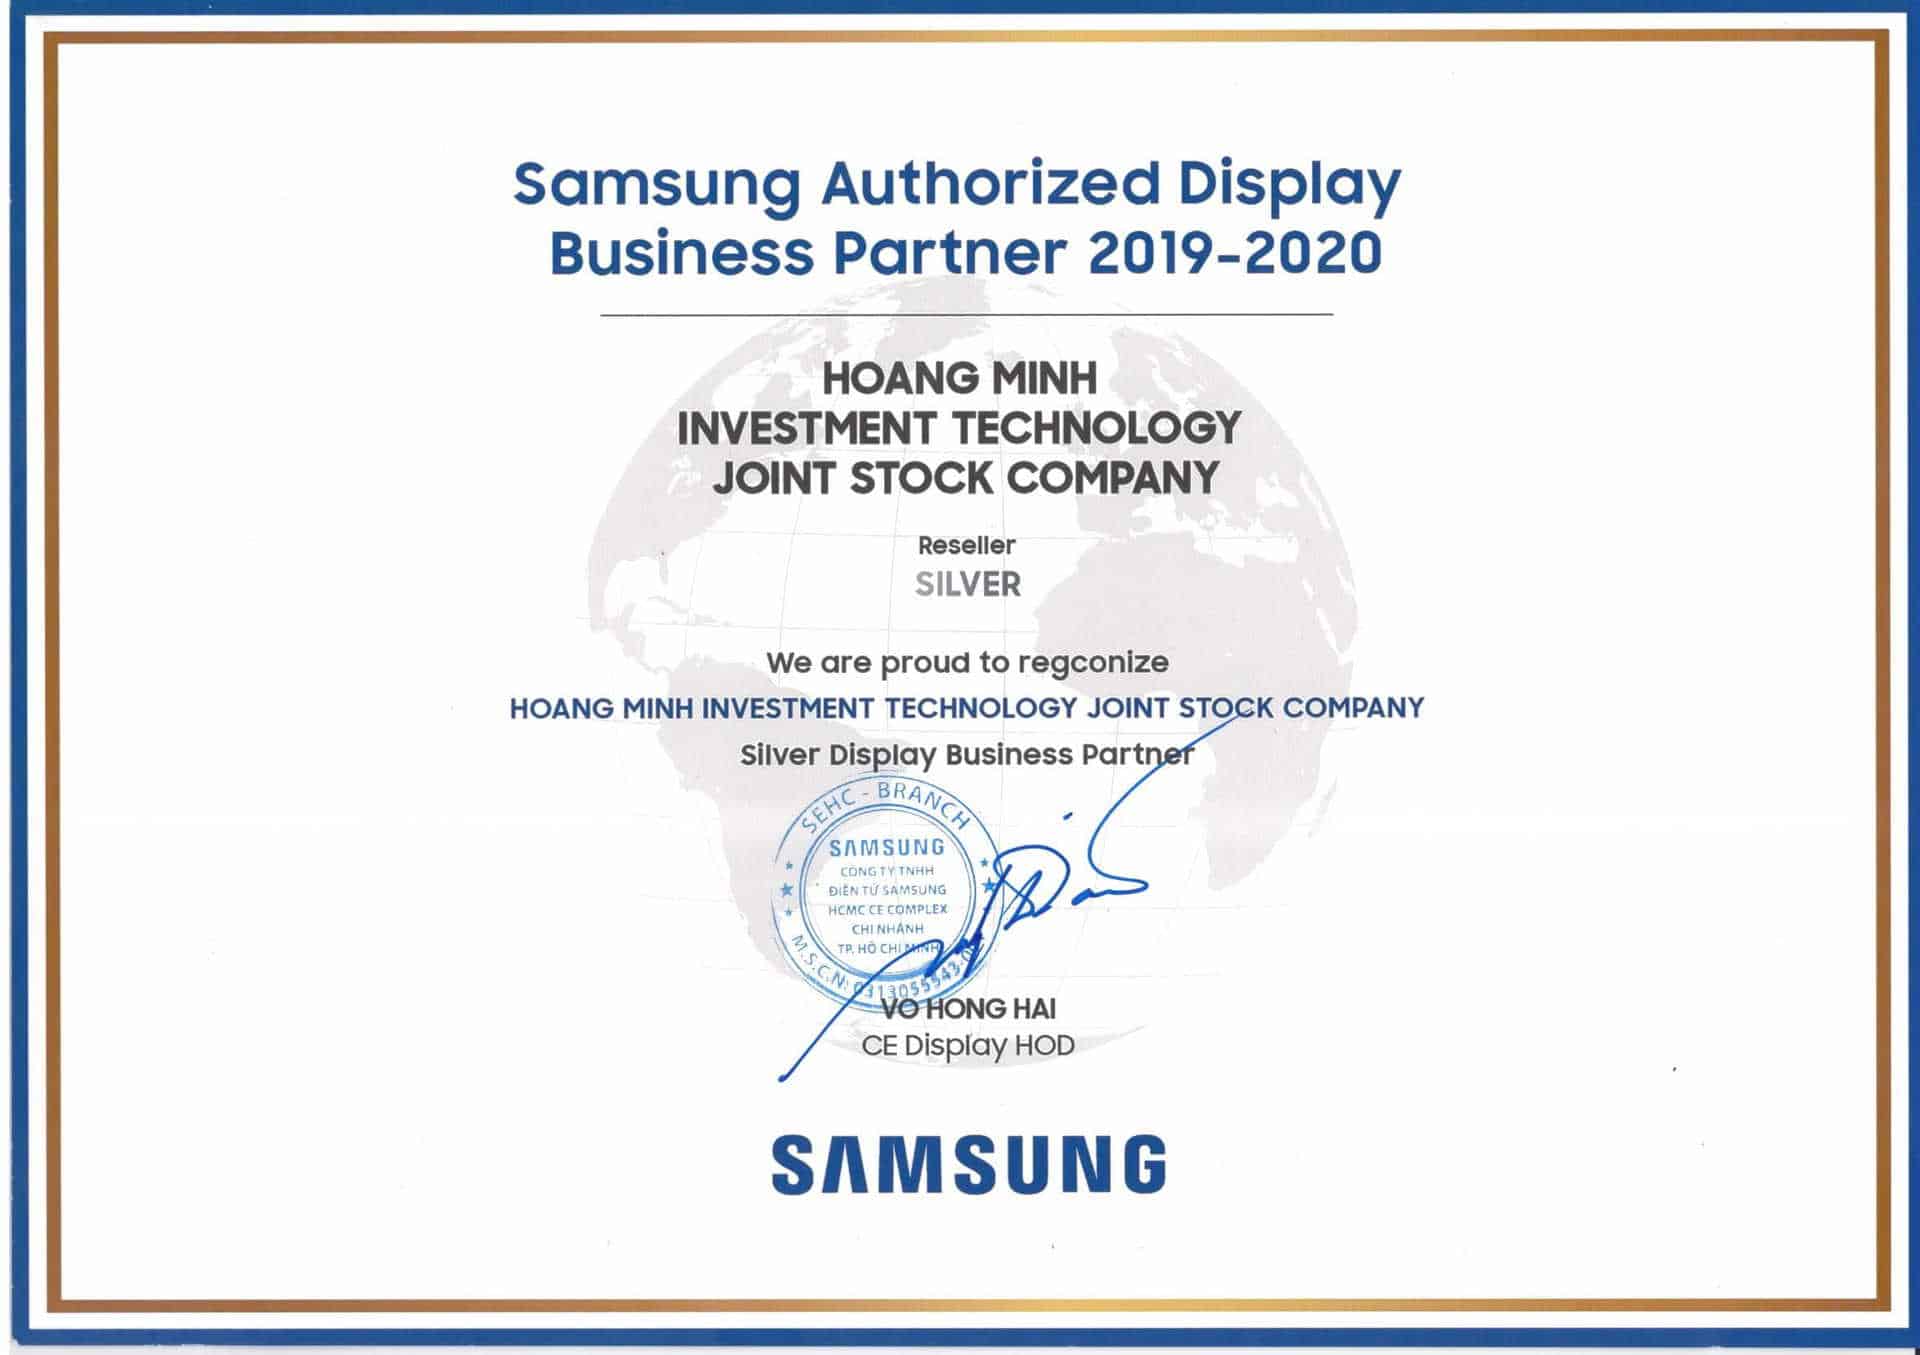 Samsung Certificate 2020 1